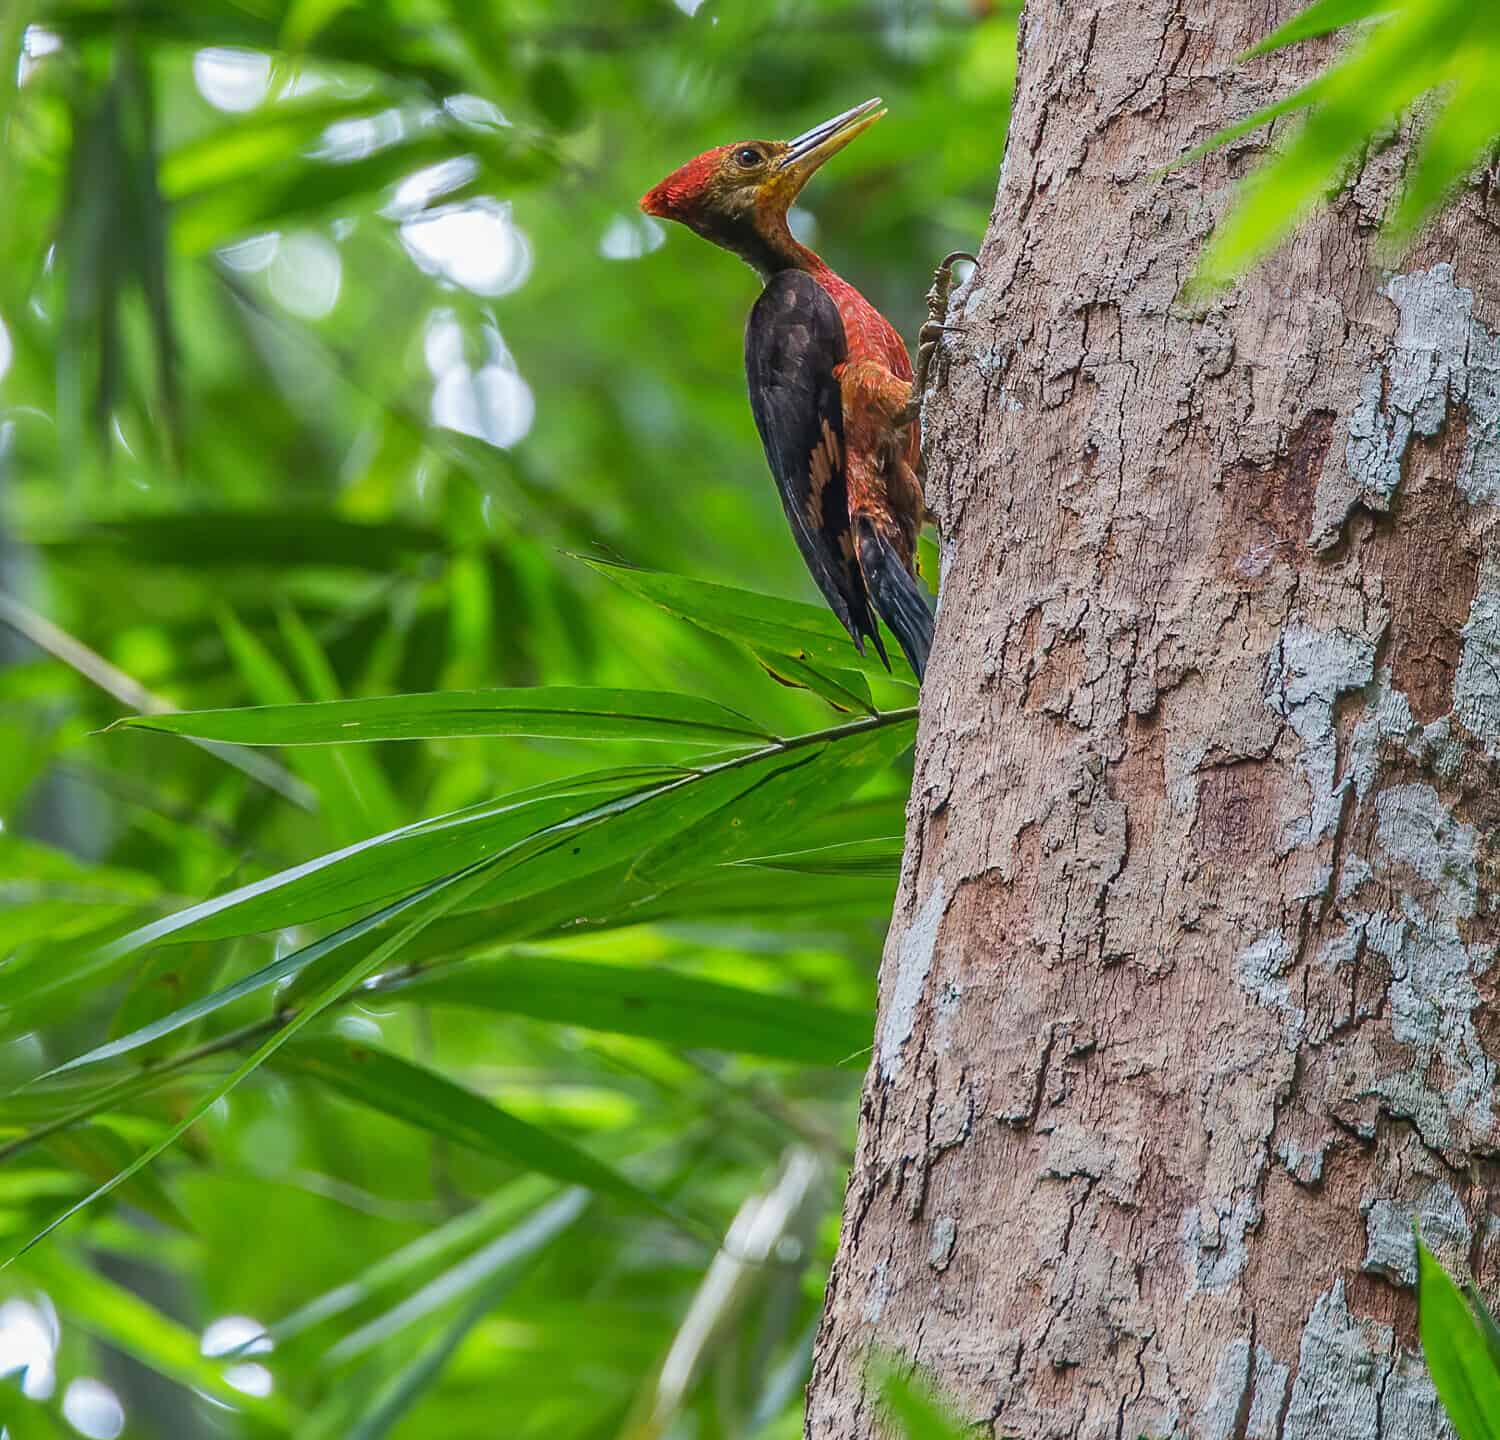 orange-backed woodpecker Reinwardtipicus validus climbing on a big tree